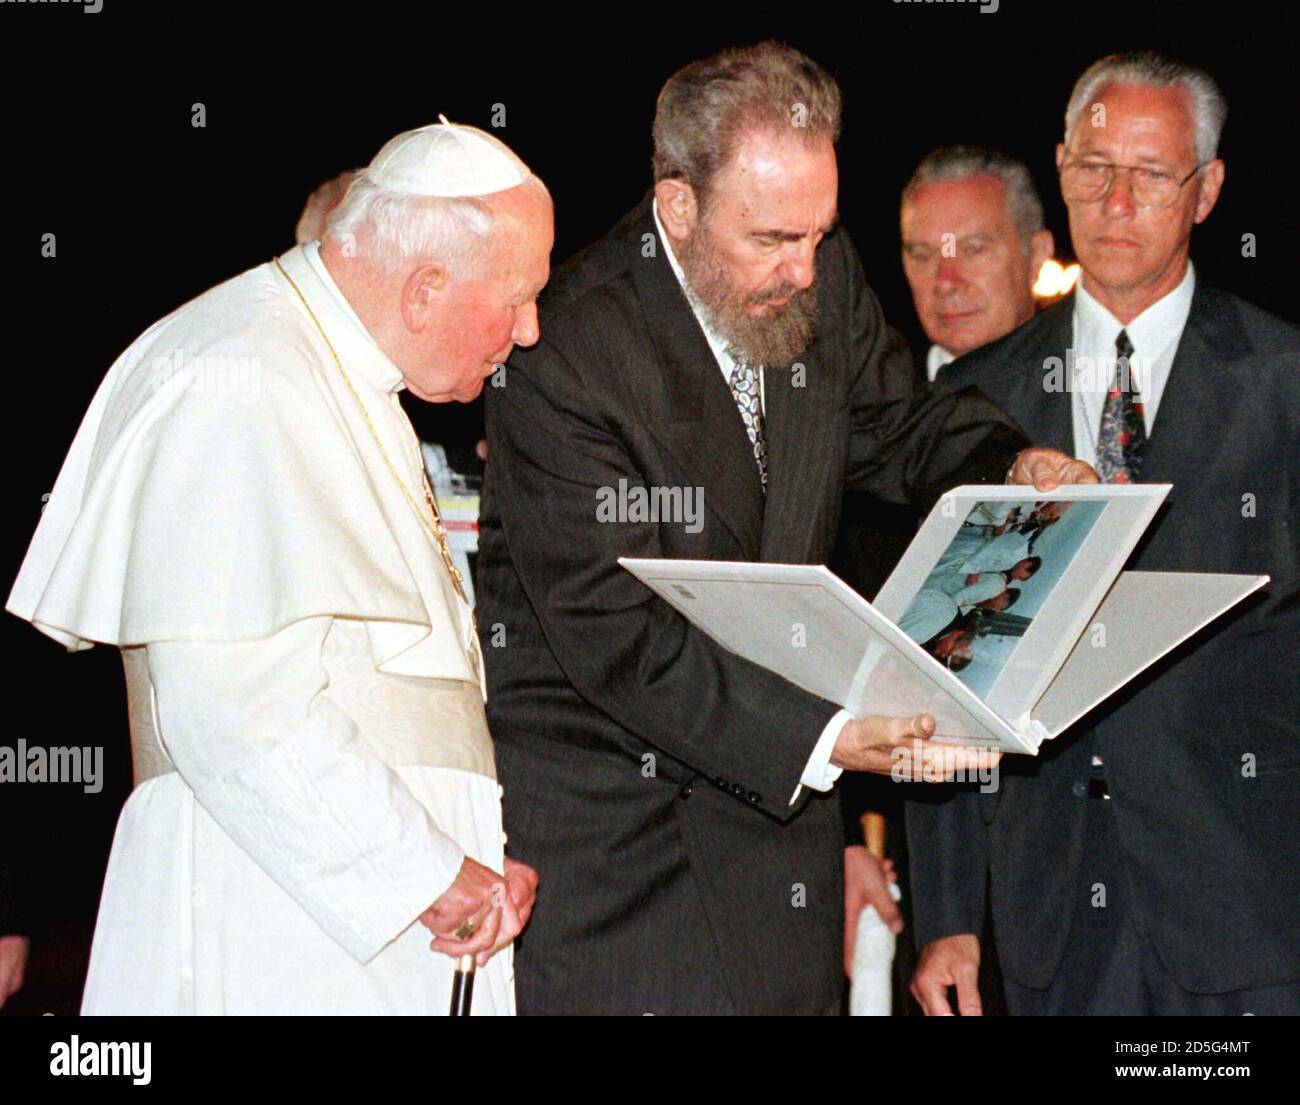 Cuban President Fidel Castro (C) shows Pope John Paul II a photo album  documenting his trip to Cuba during departure ceremonies in Havana January  25. Castro presented the Pontiff with the album